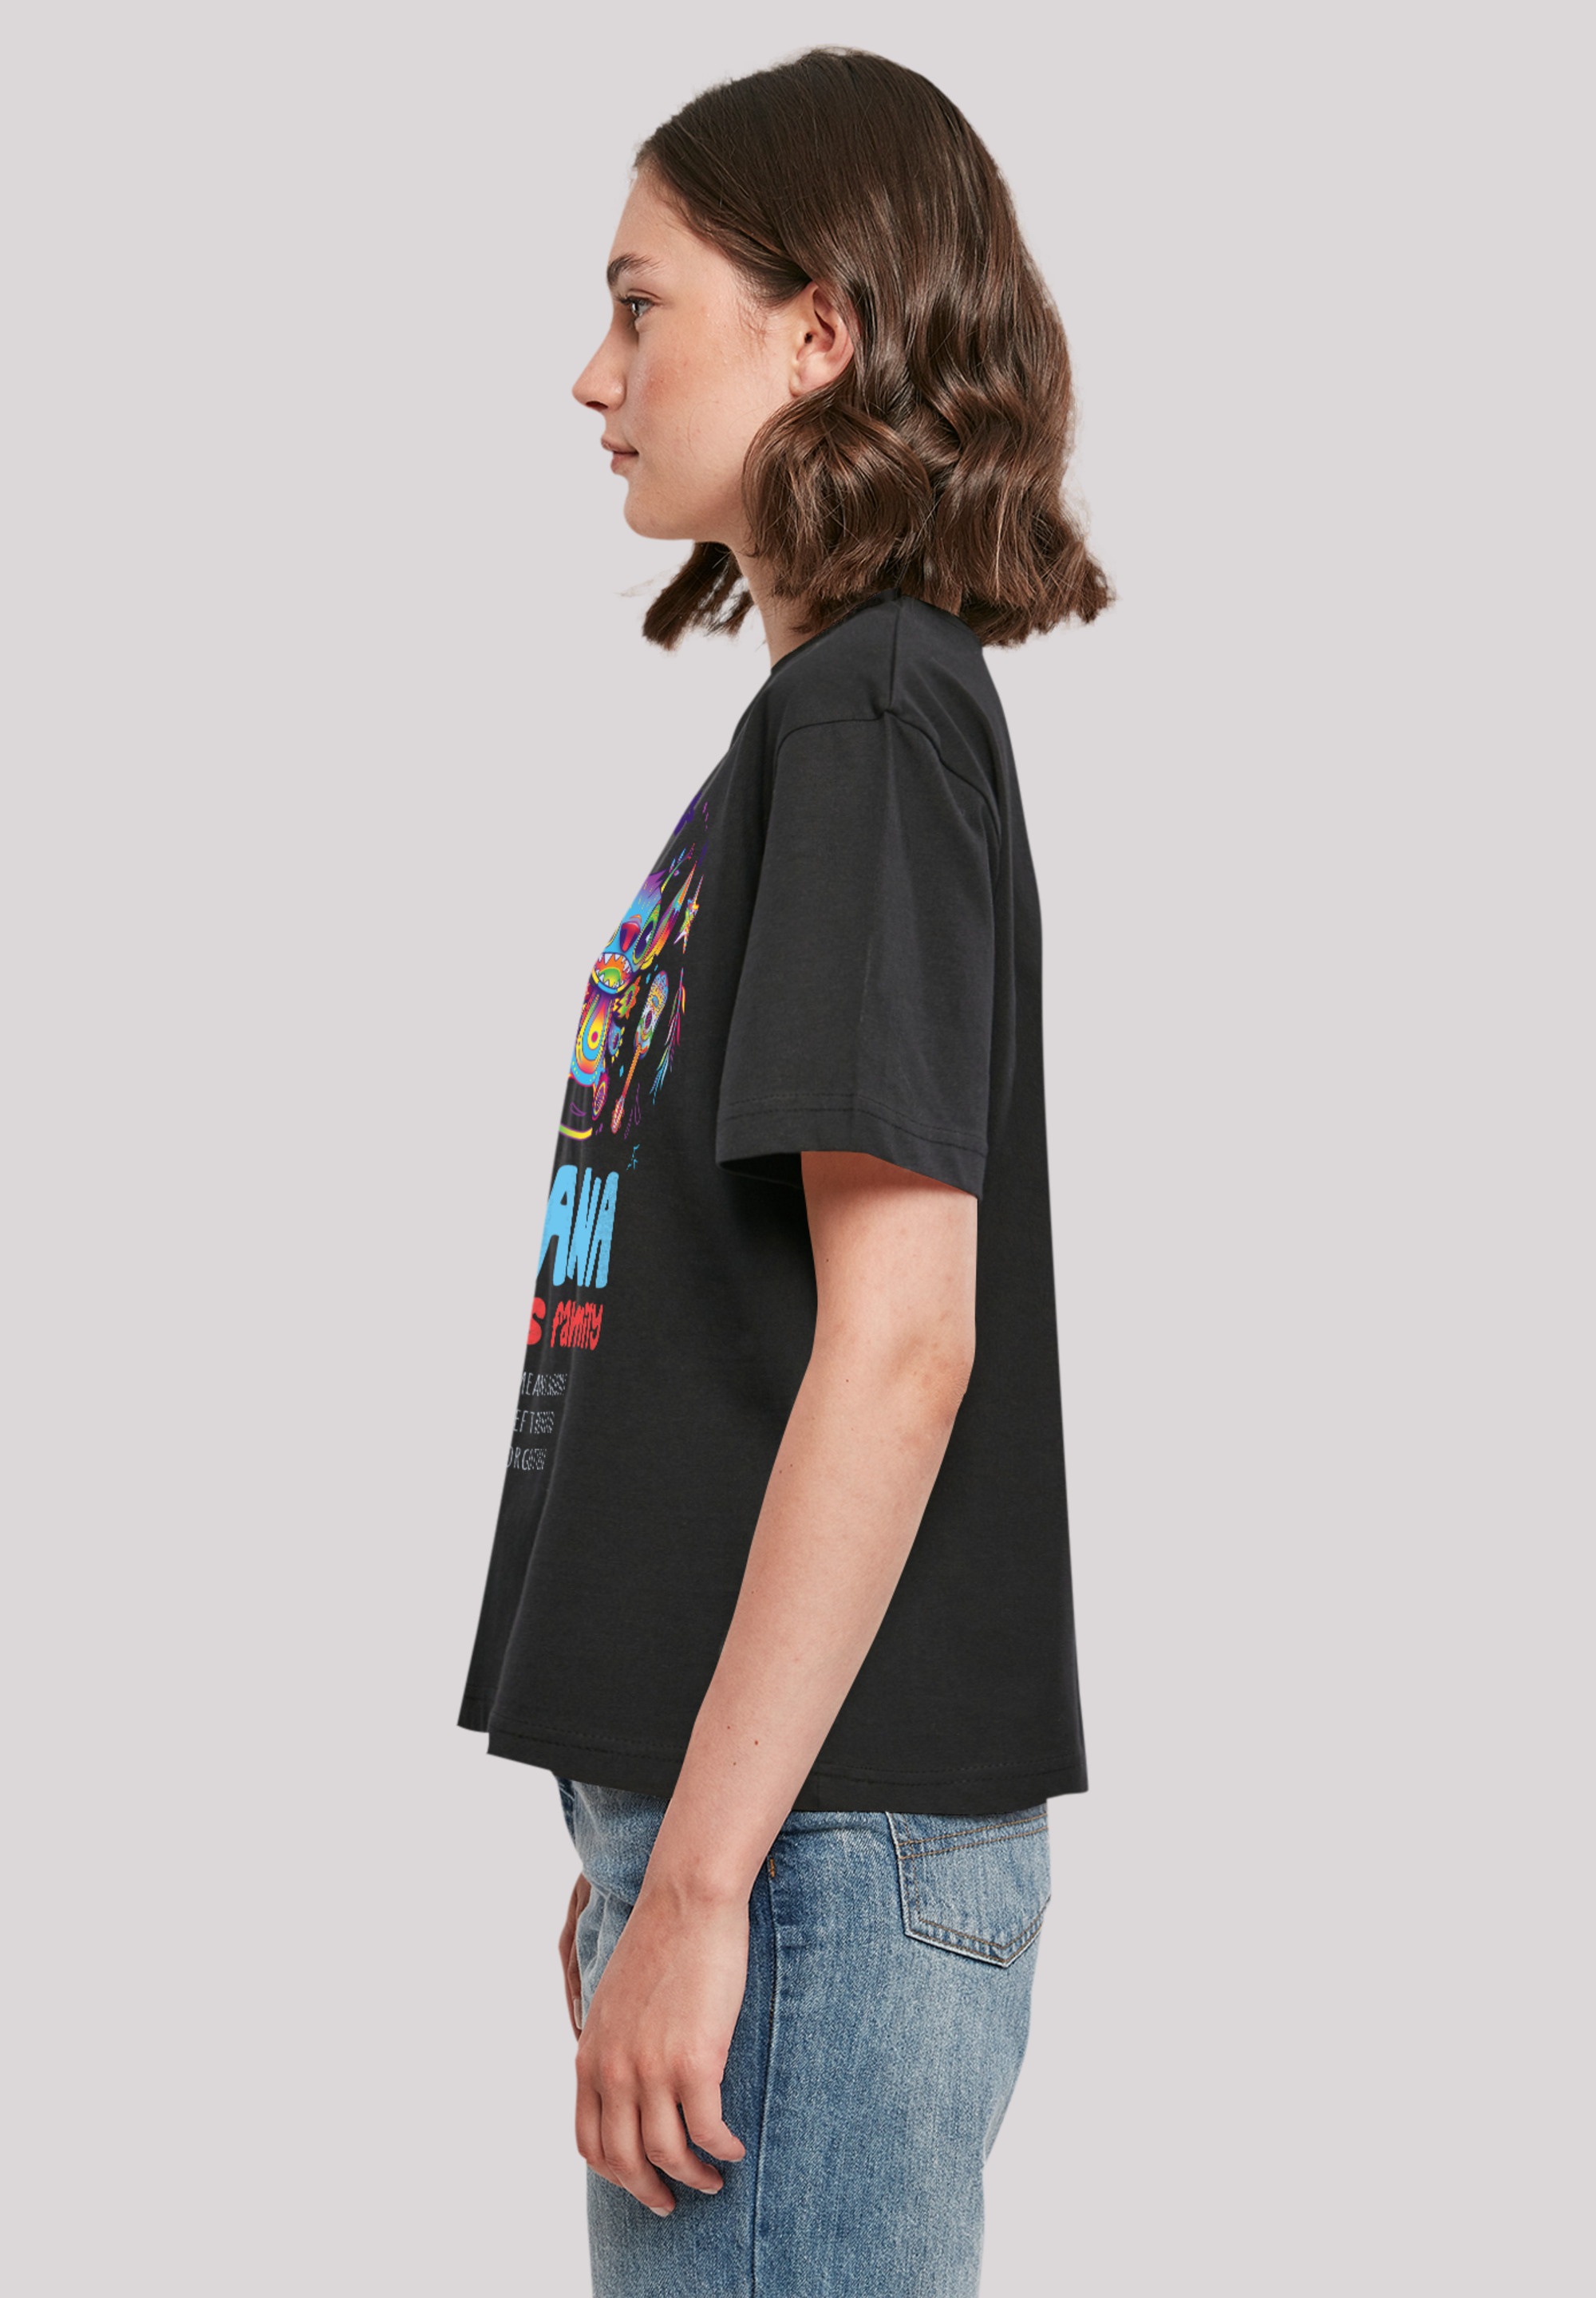 F4NT4STIC T-Shirt »Disney Lilo & Stitch Ohana Mexico«, Premium Qualität